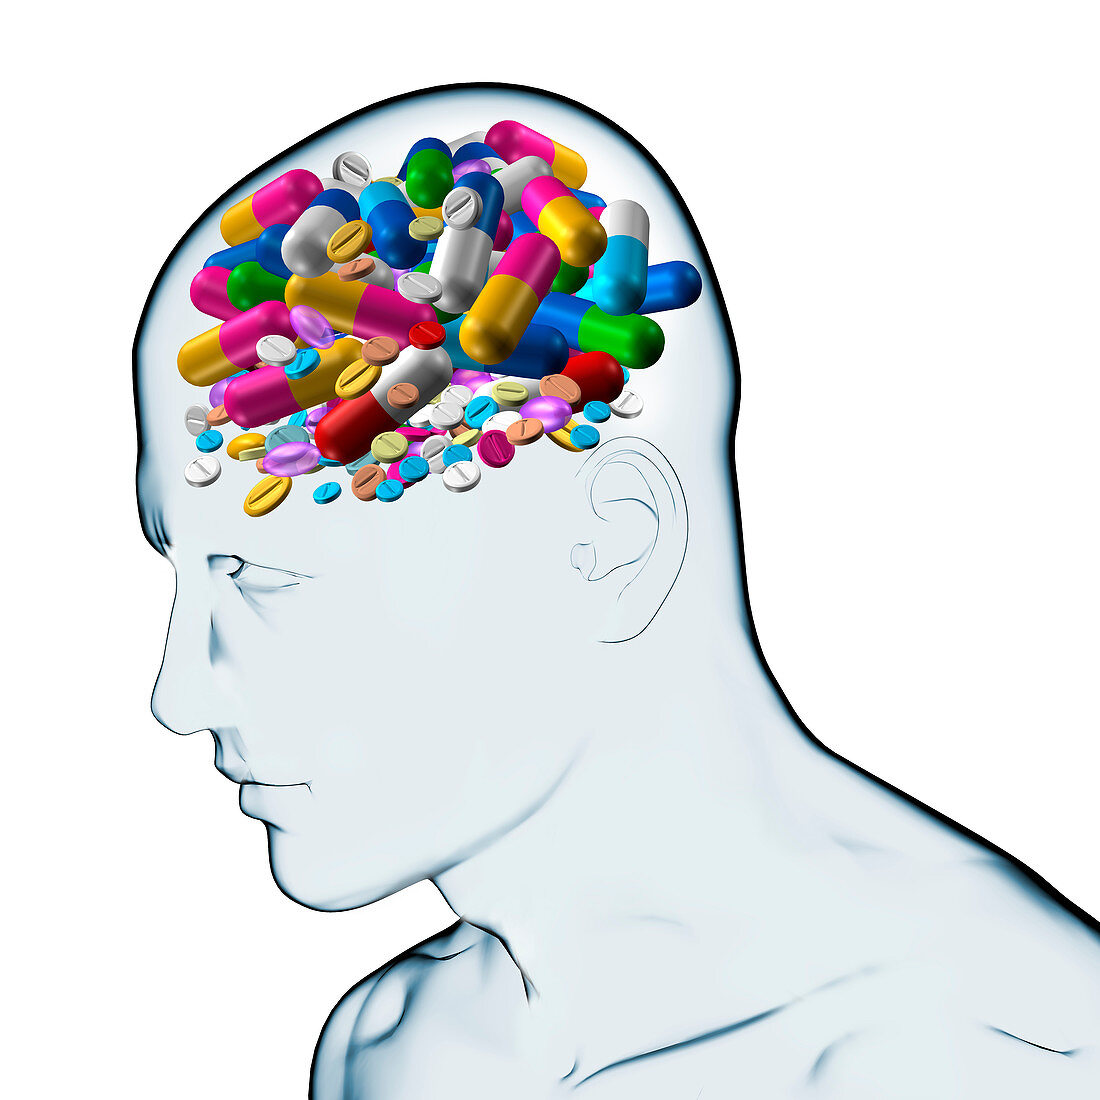 Drug addiction, conceptual illustration